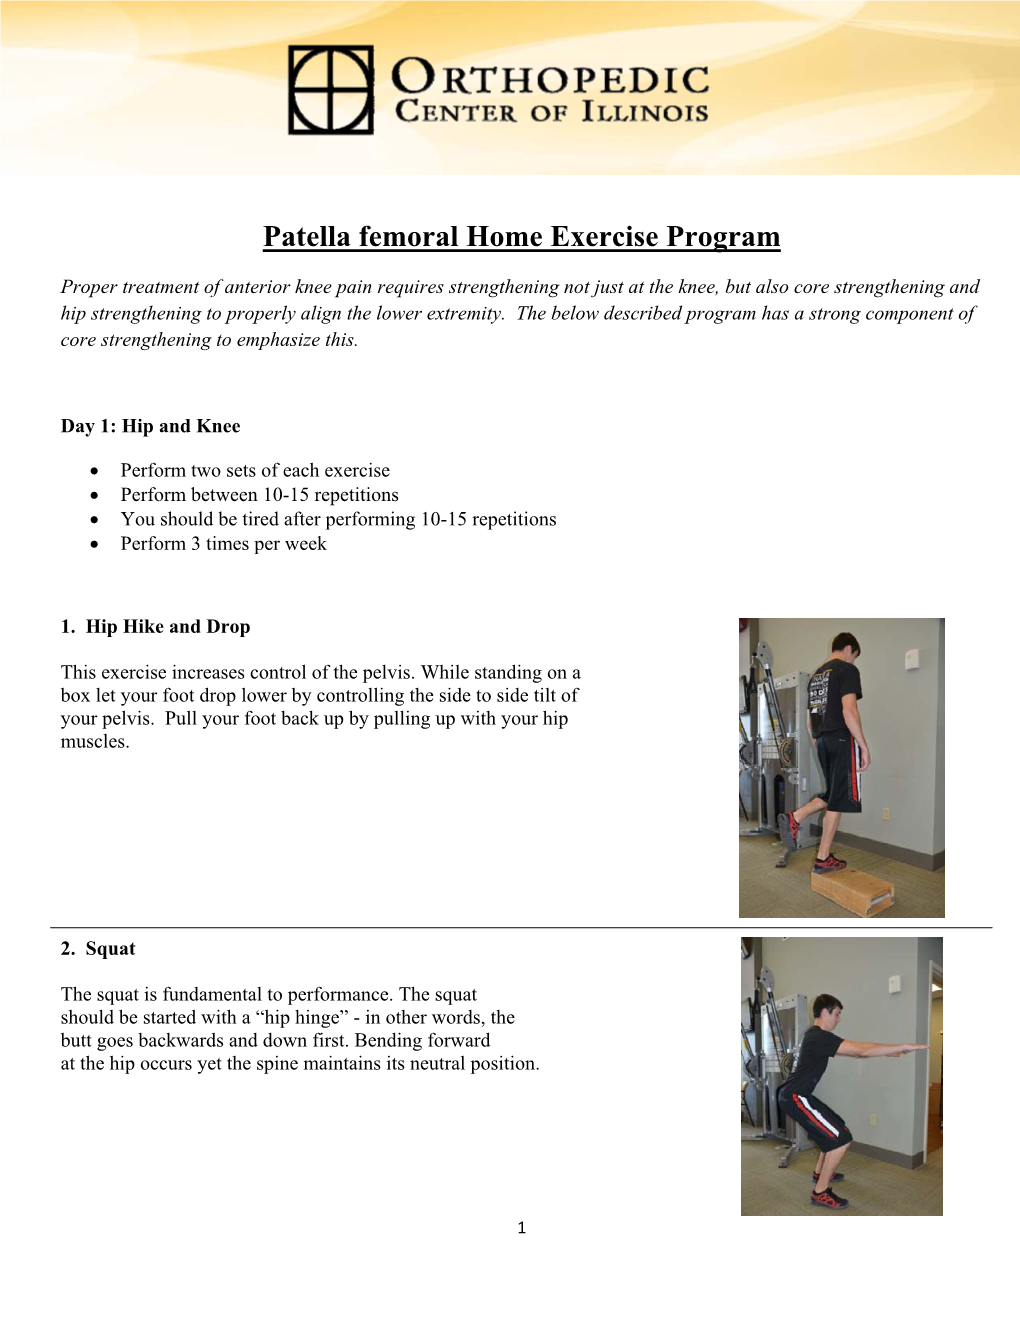 Patella Femoral Home Exercise Program